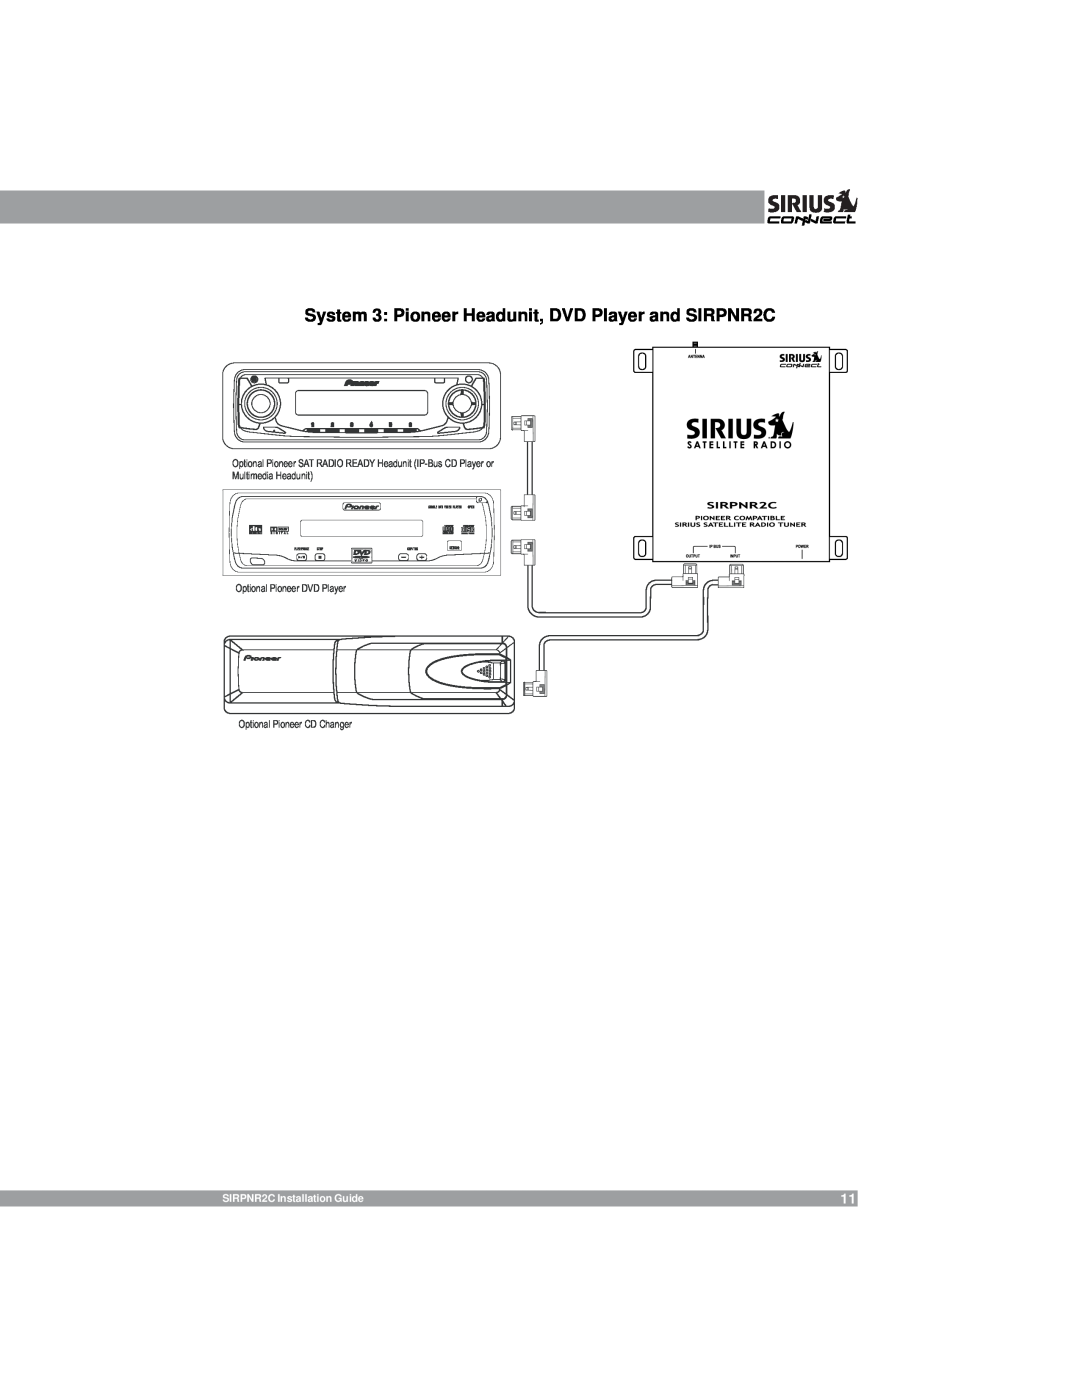 Sirius Satellite Radio SIRPNR2C manual Multimedia Headunit Optional Pioneer DVD Player, Optional Pioneer CD Changer 